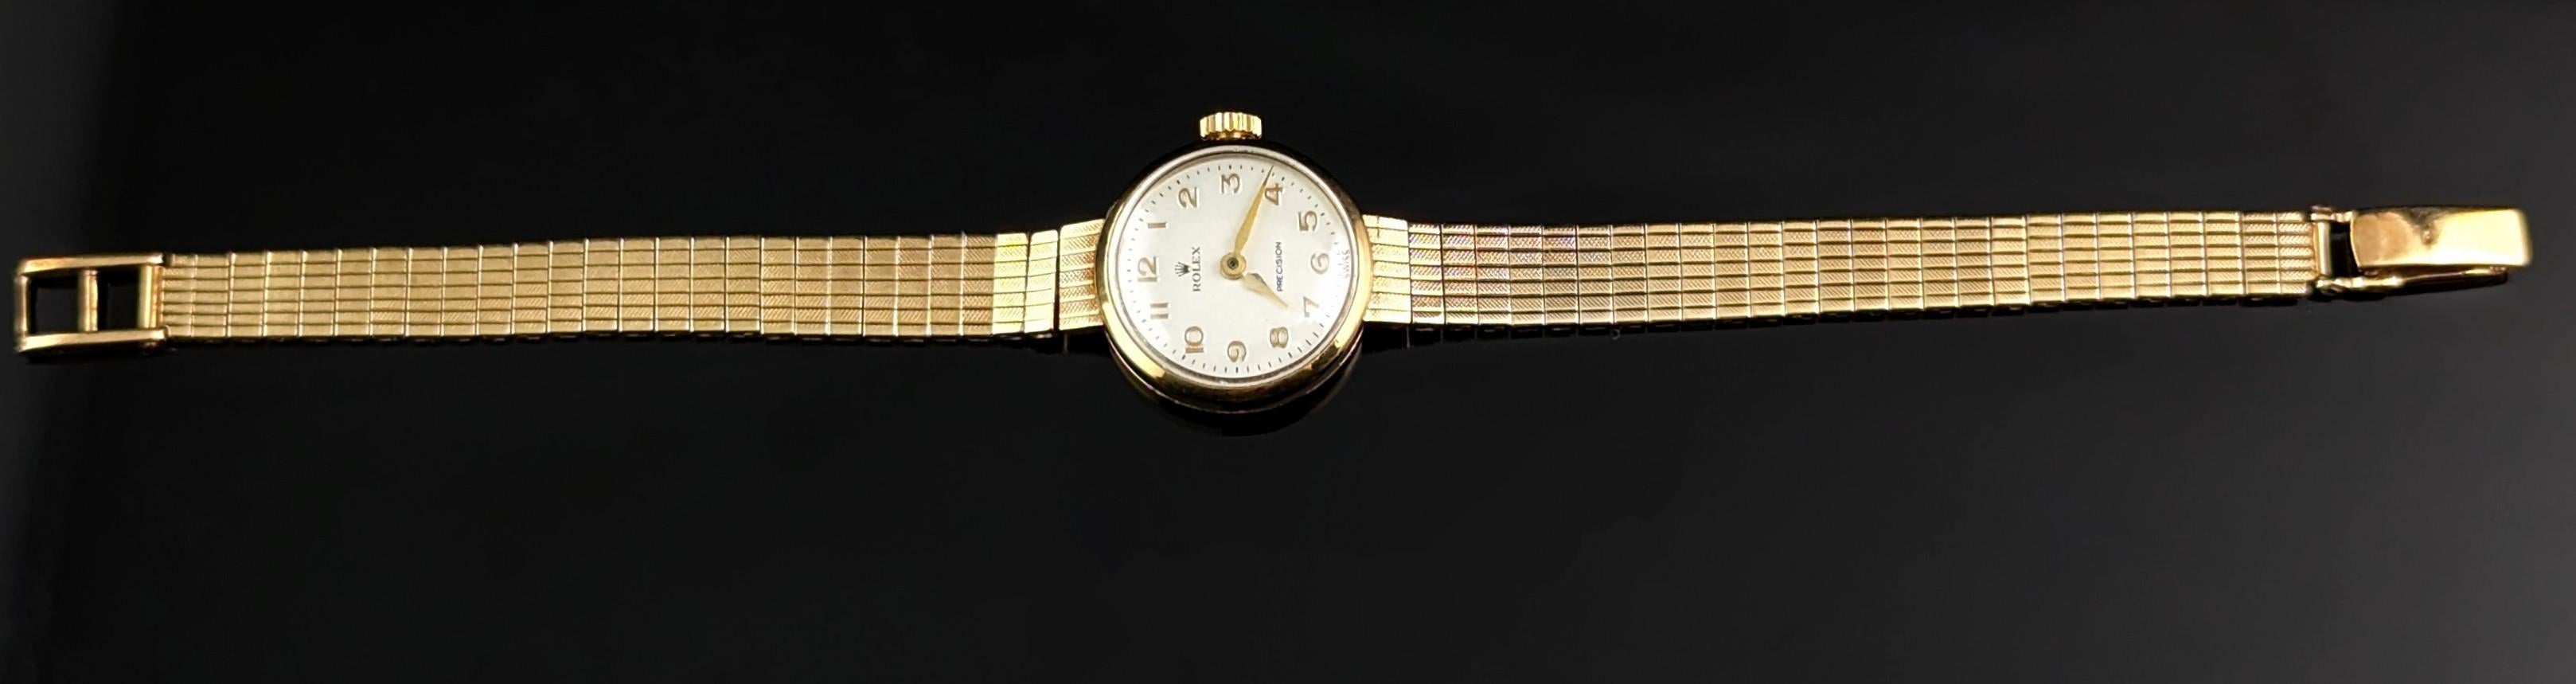 Vintage 9k gold Ladies Rolex Precision wristwatch, boxed watch  For Sale 2